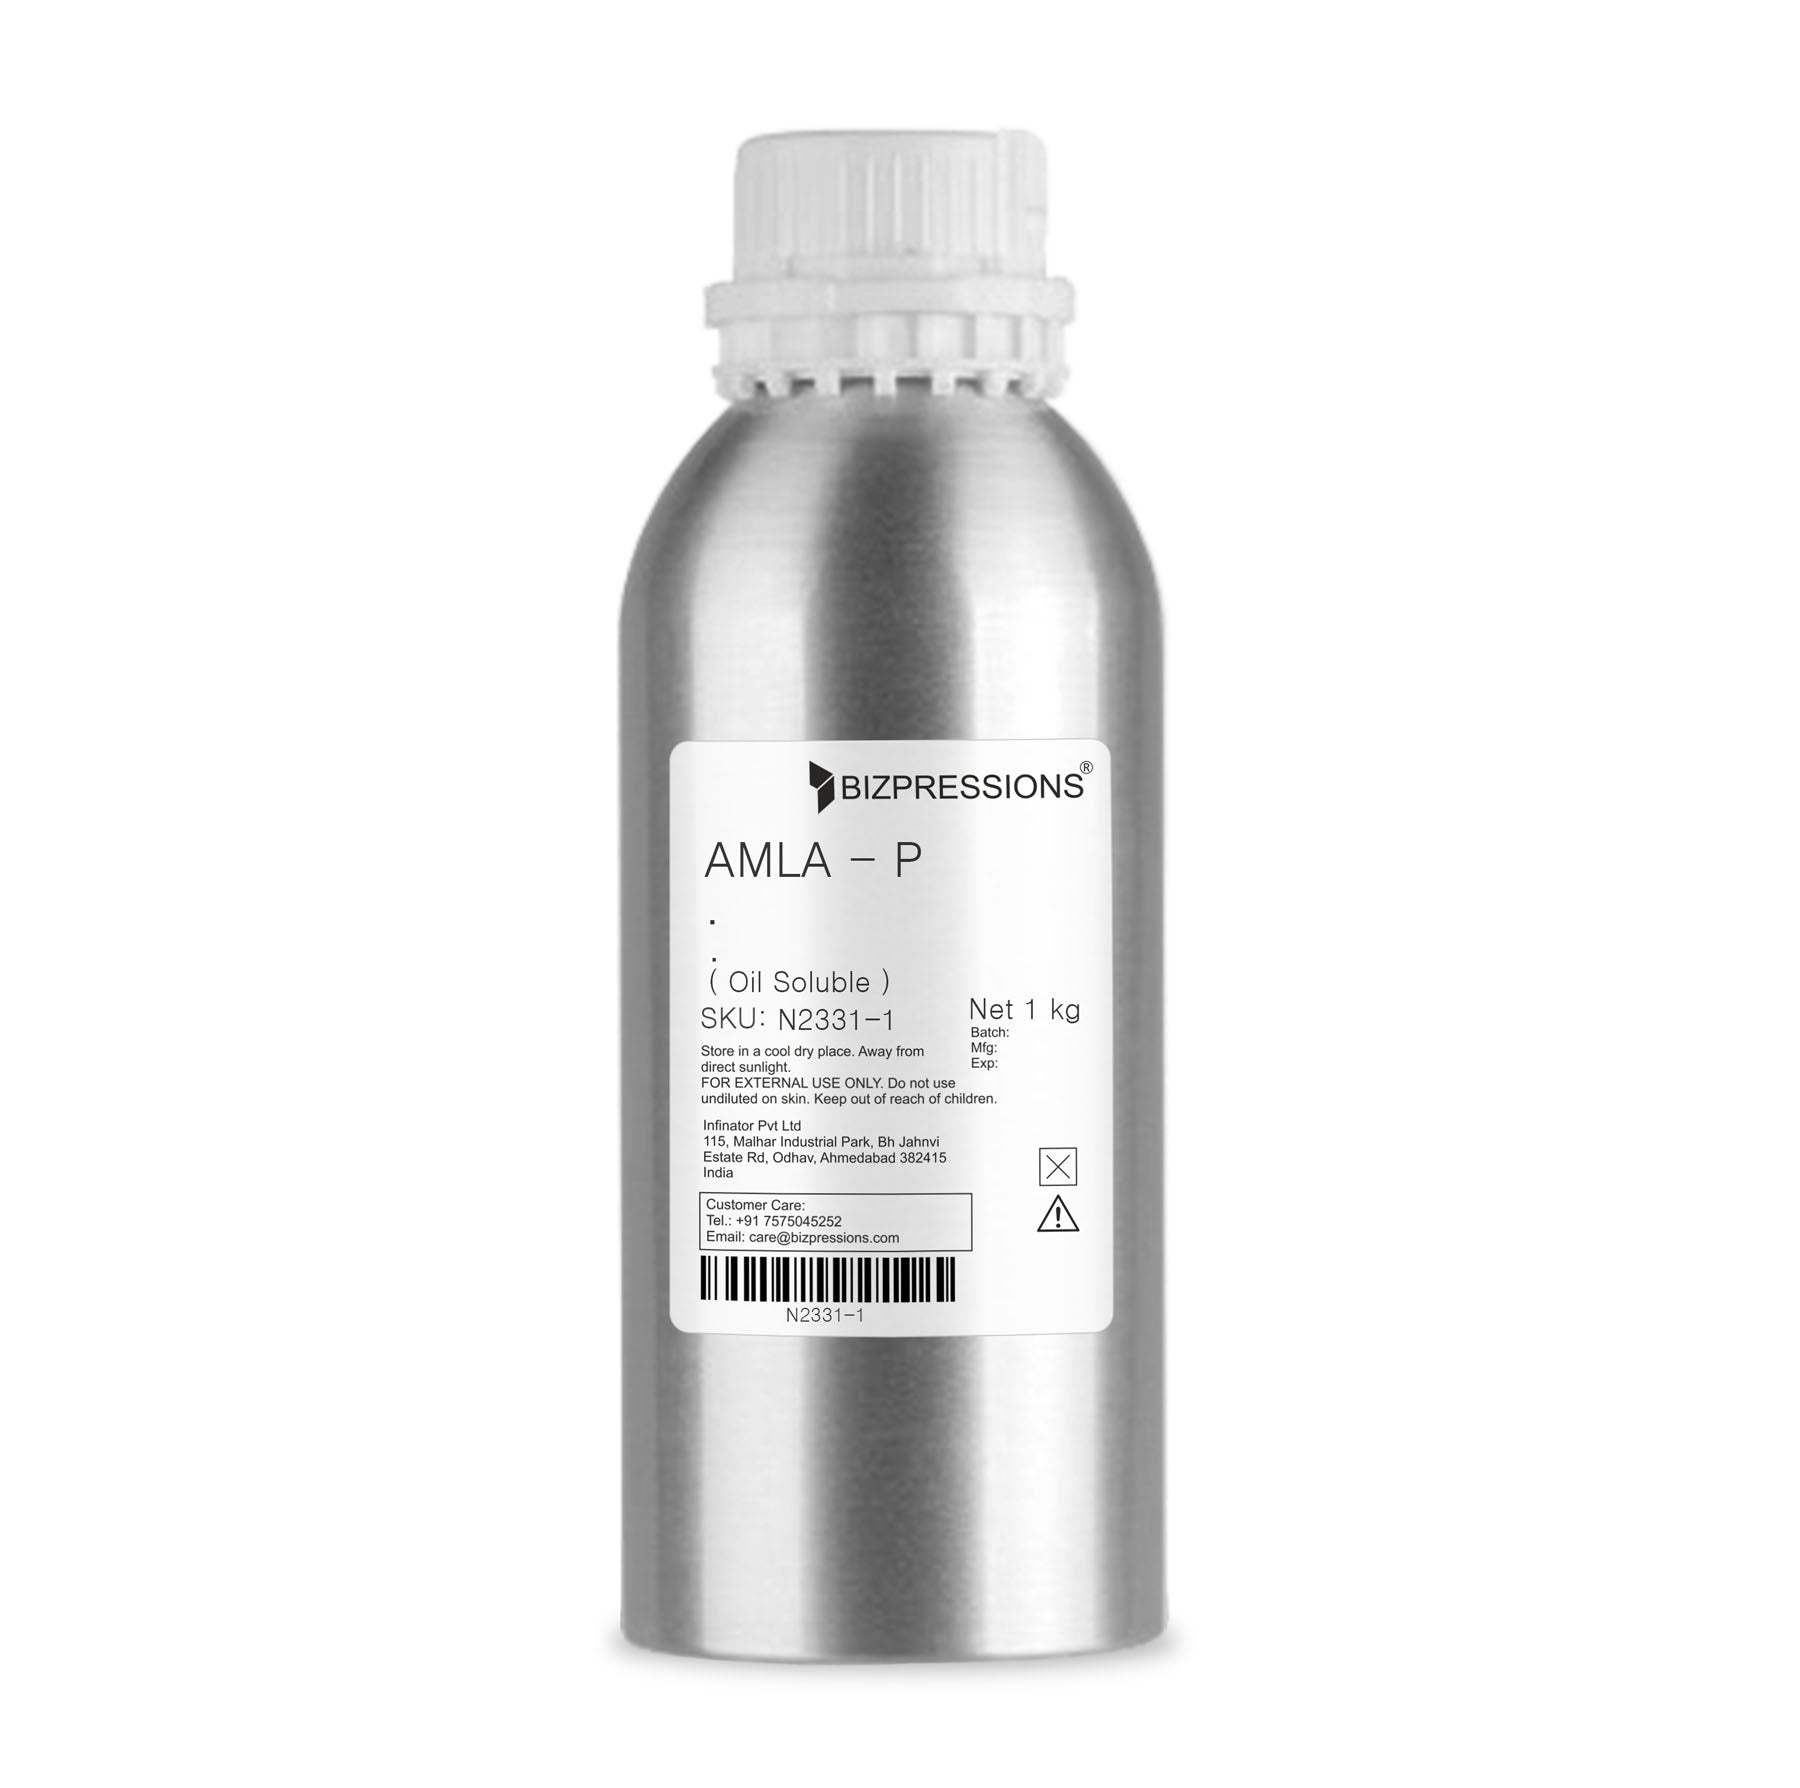 AMLA - P - Fragrance ( Oil Soluble ) - 1 kg